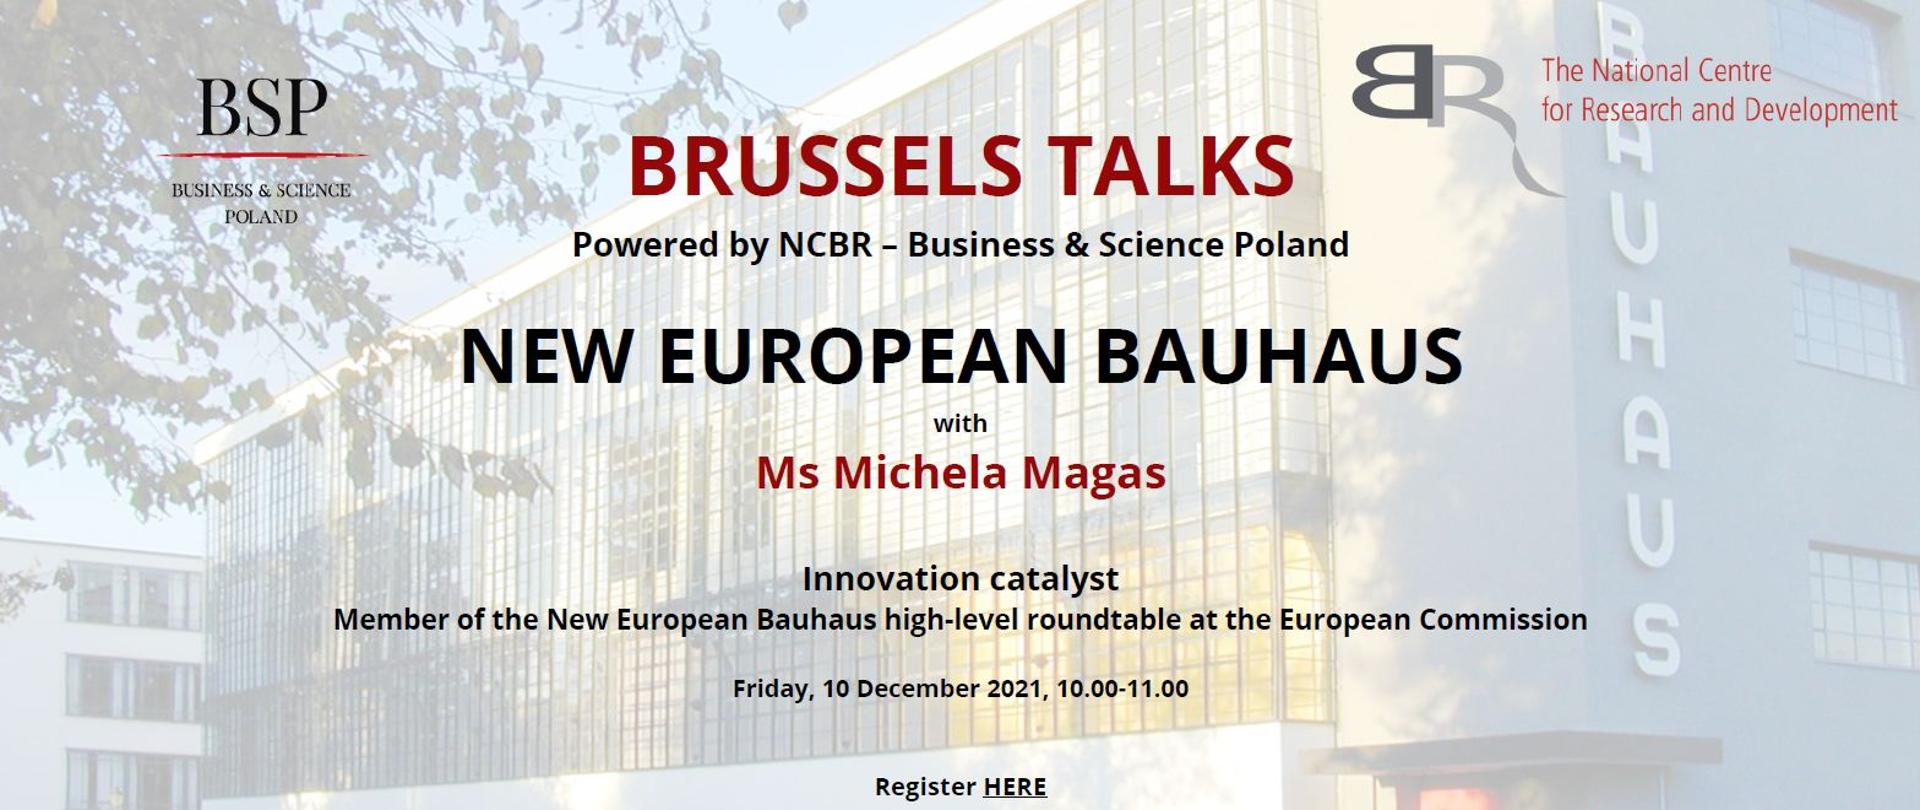 Brussels Talks on the New European Bauhaus